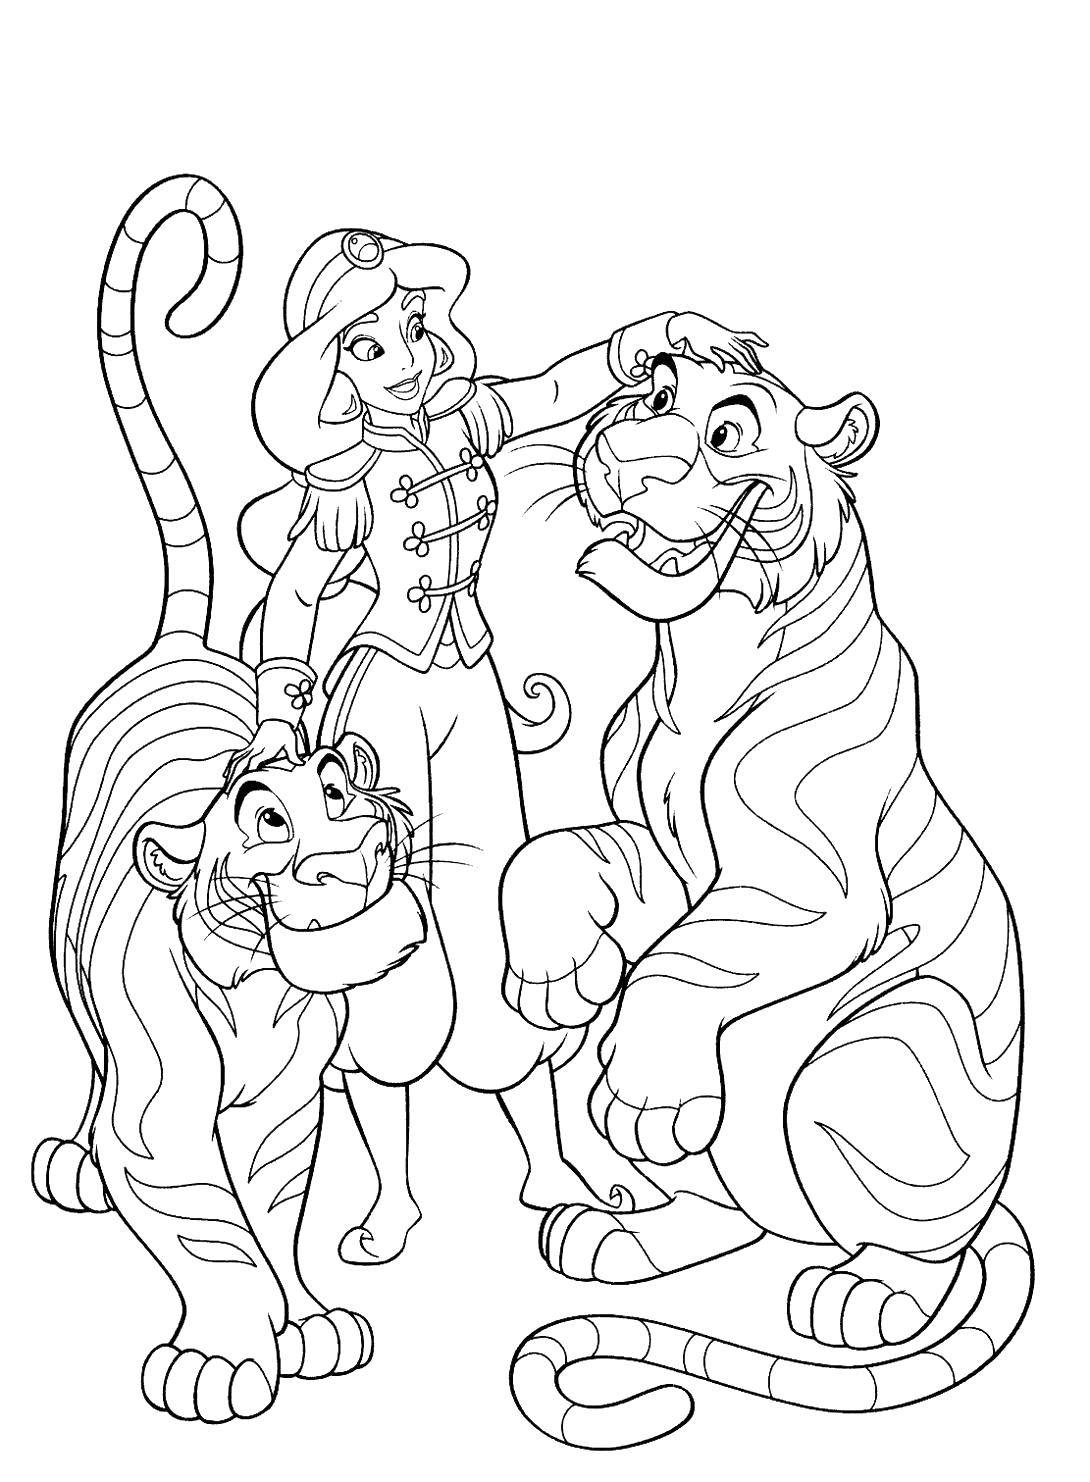 Coloring Jasmine and tiger cubs. Category Aladdin. Tags:  Disney, Aladdin, Jasmine.